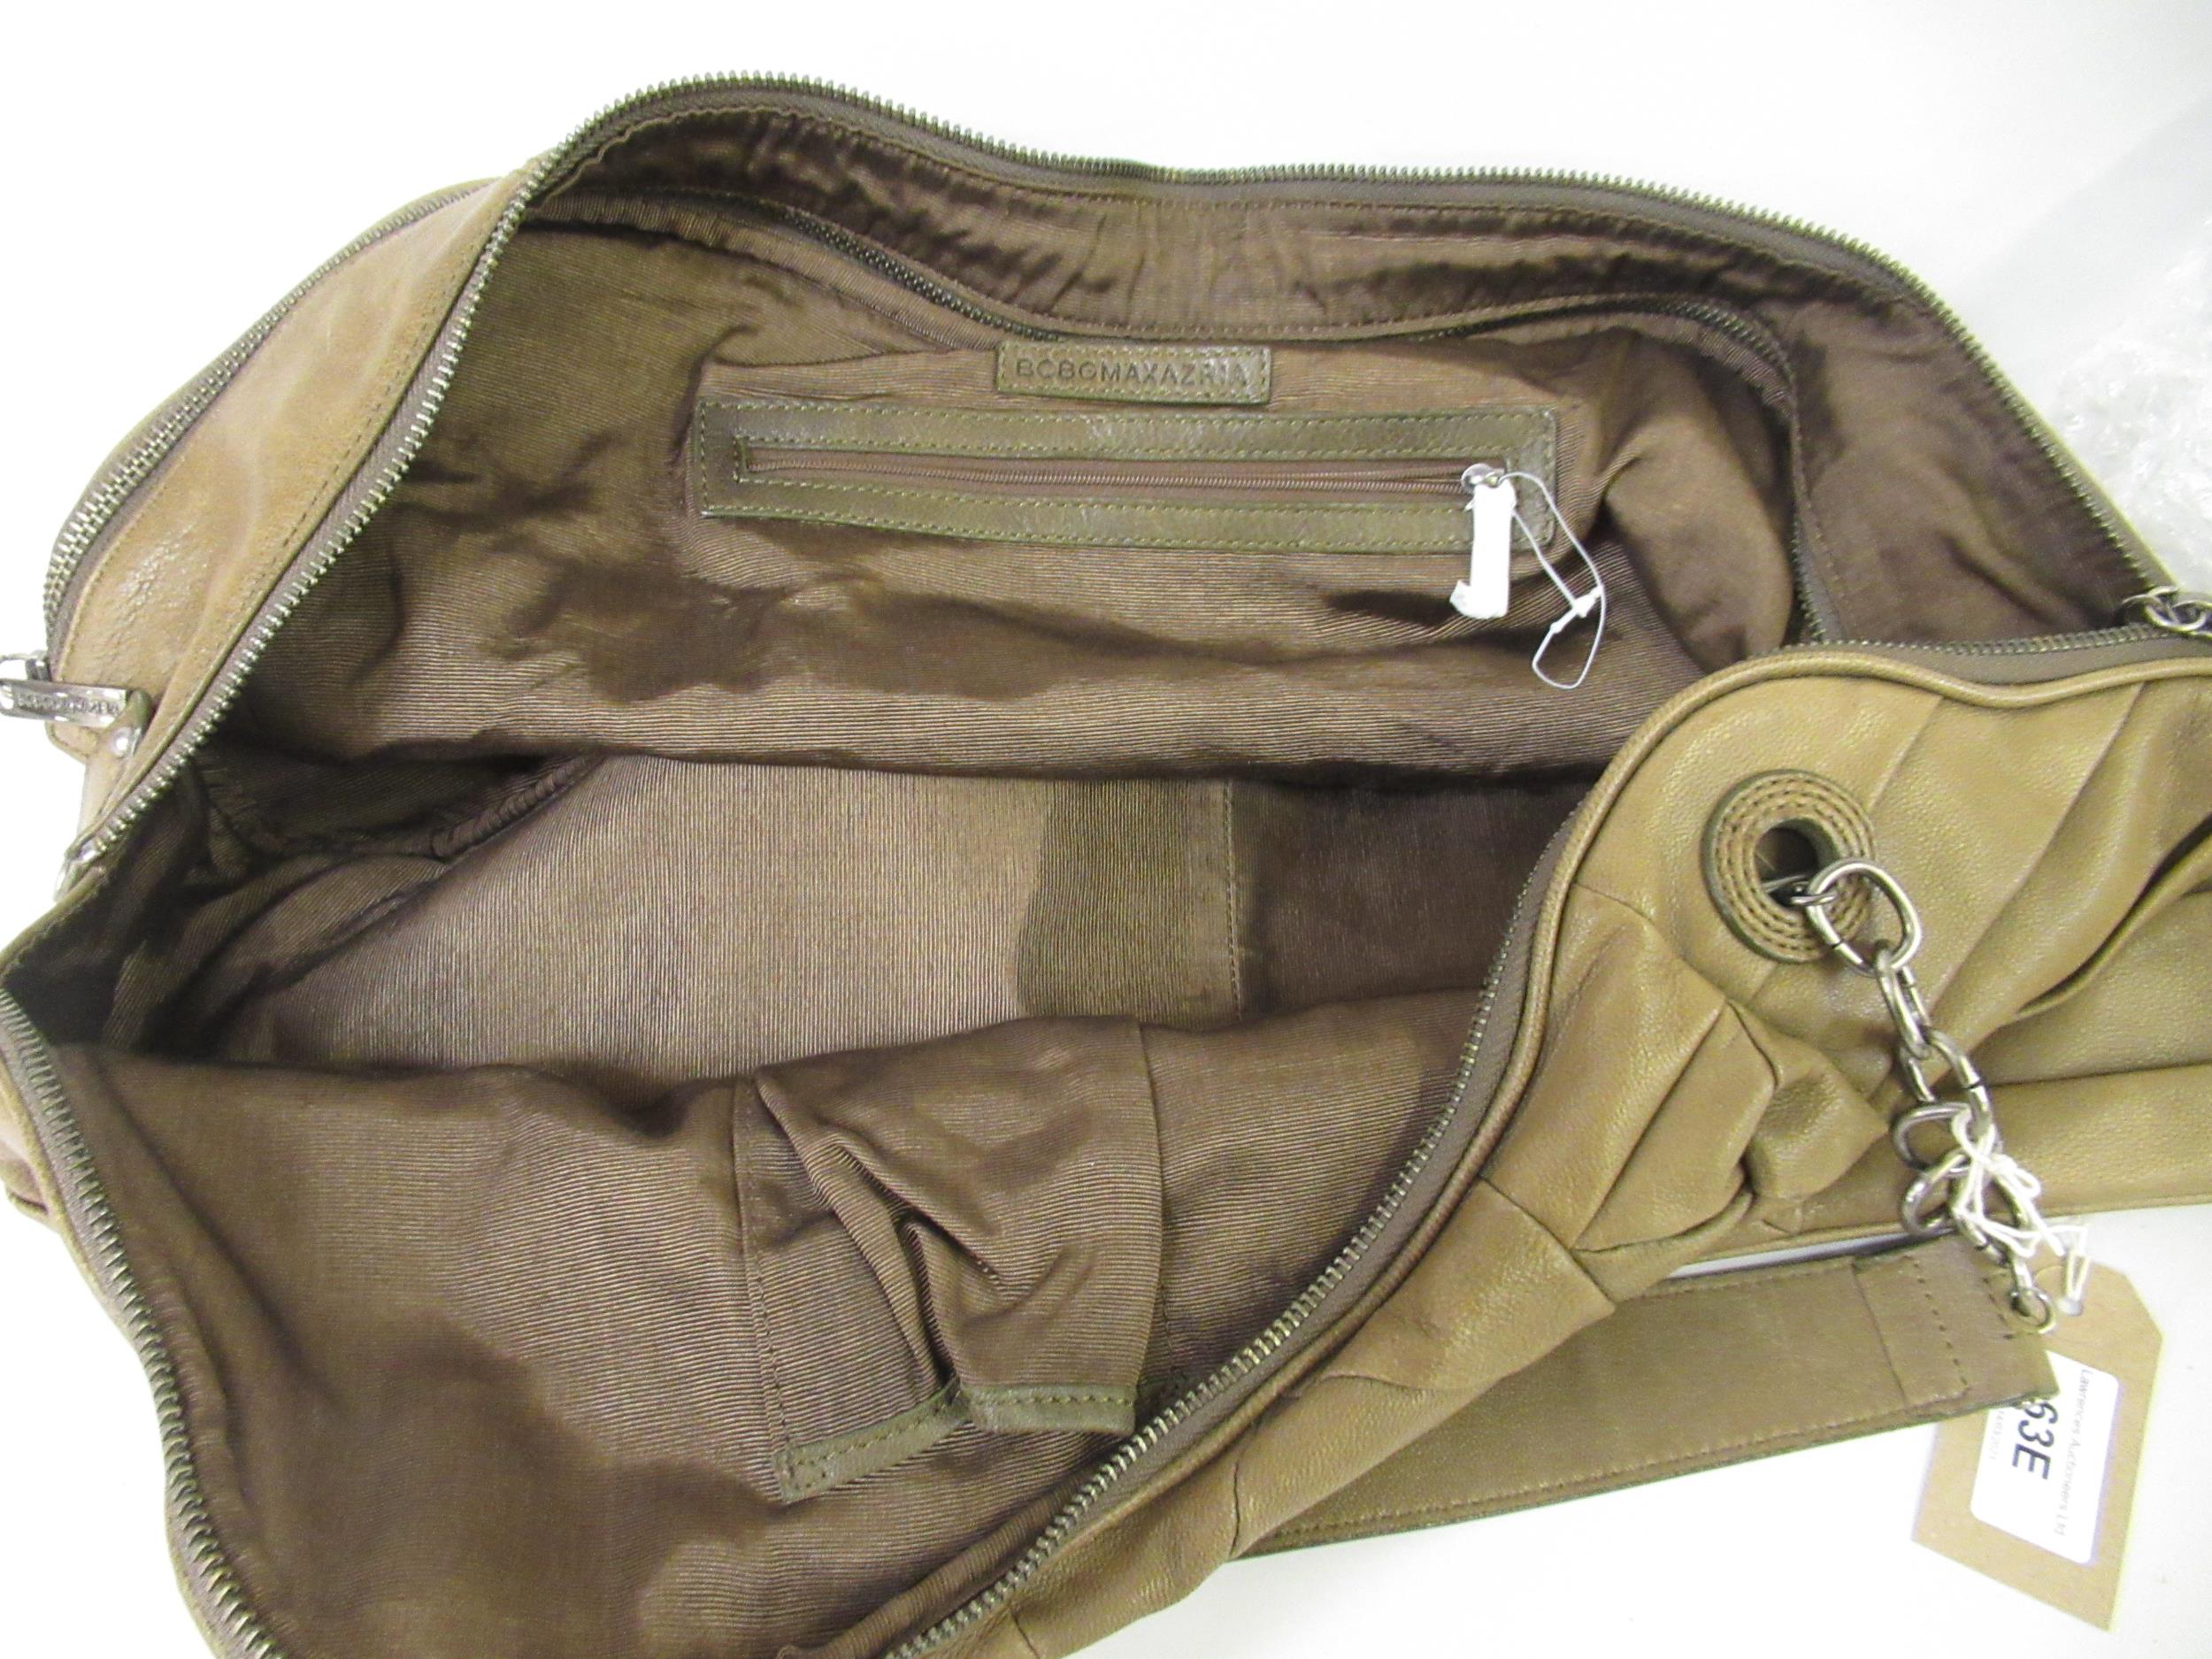 BCBG Max Azria, large green leather shoulder bag One zip tag missing - Image 6 of 9